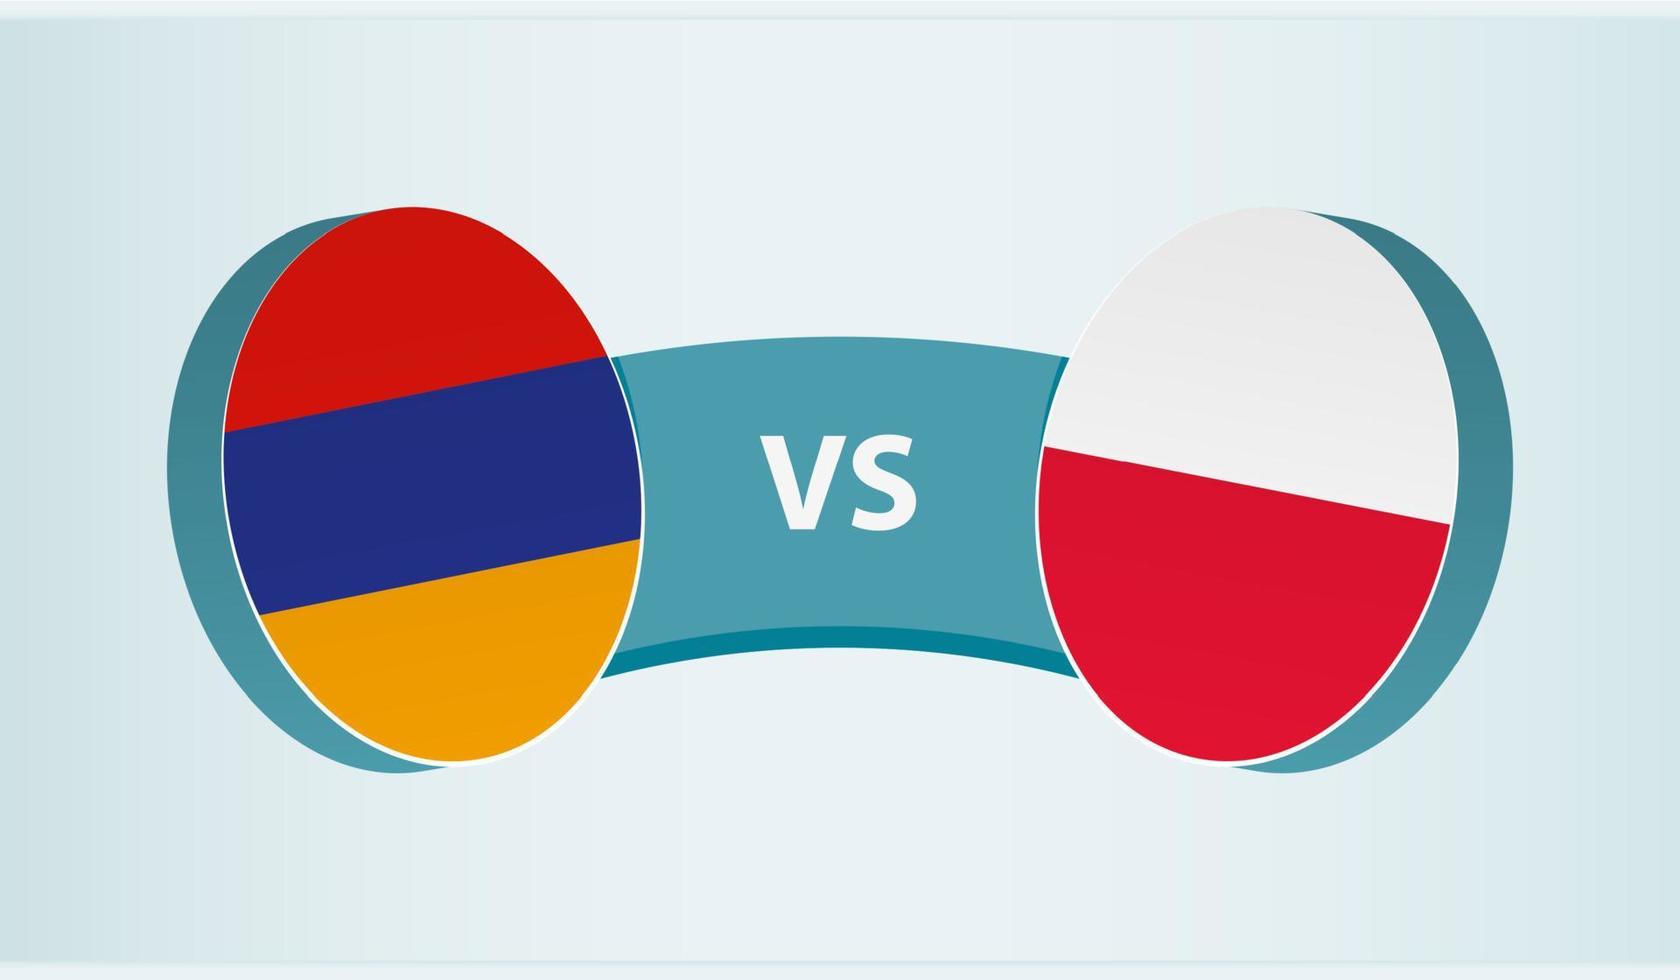 Armenia versus Poland, team sports competition concept. vector